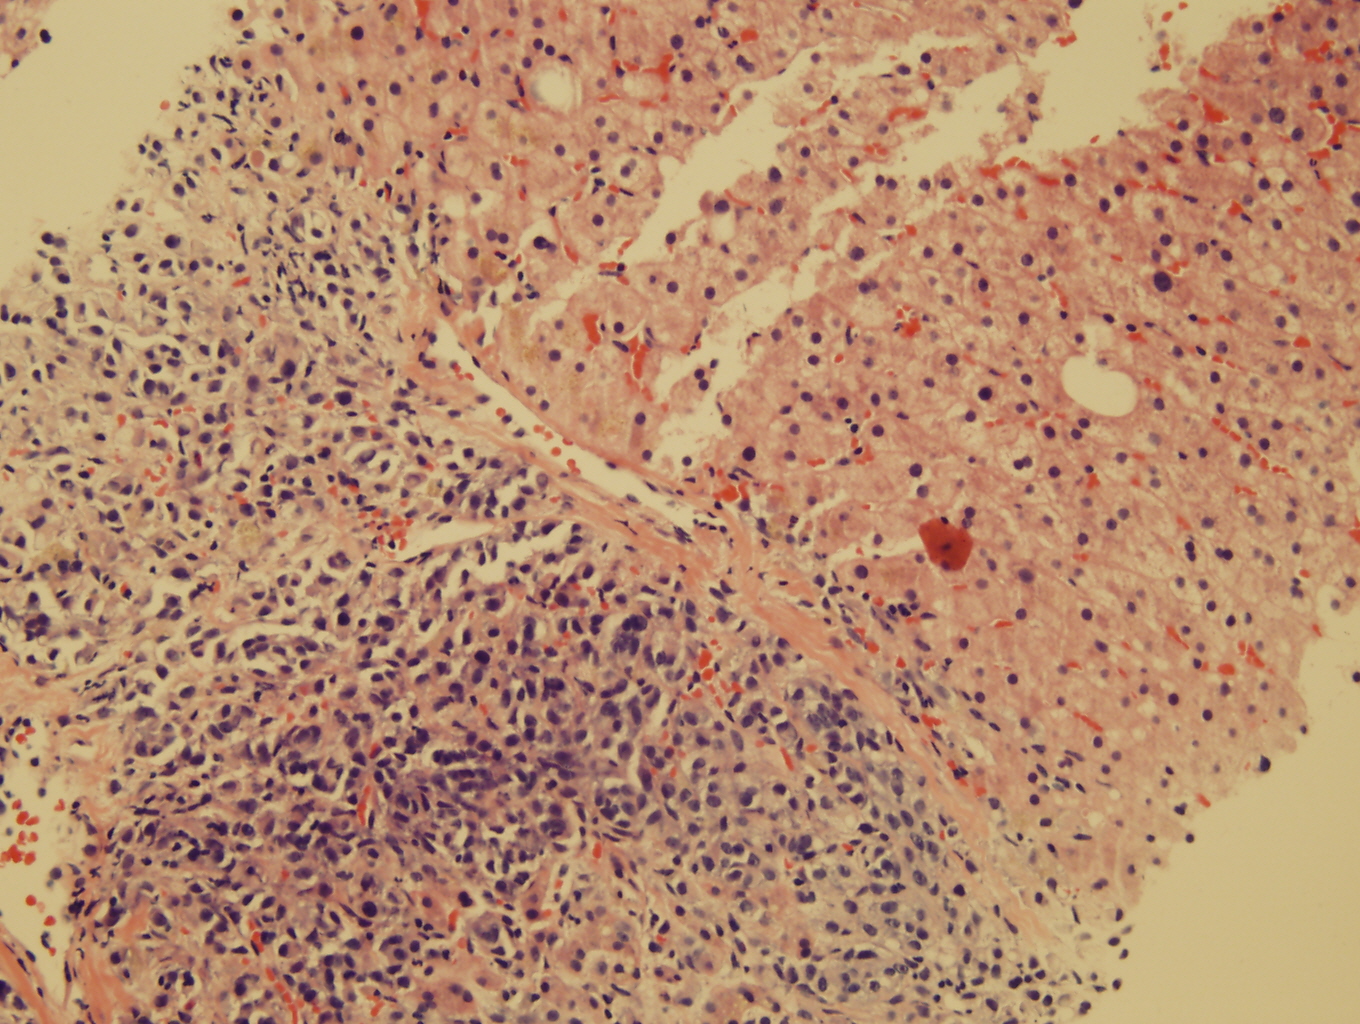 Microscopic image 3 - Liver core biopsy, H&E (Click to enlarge)